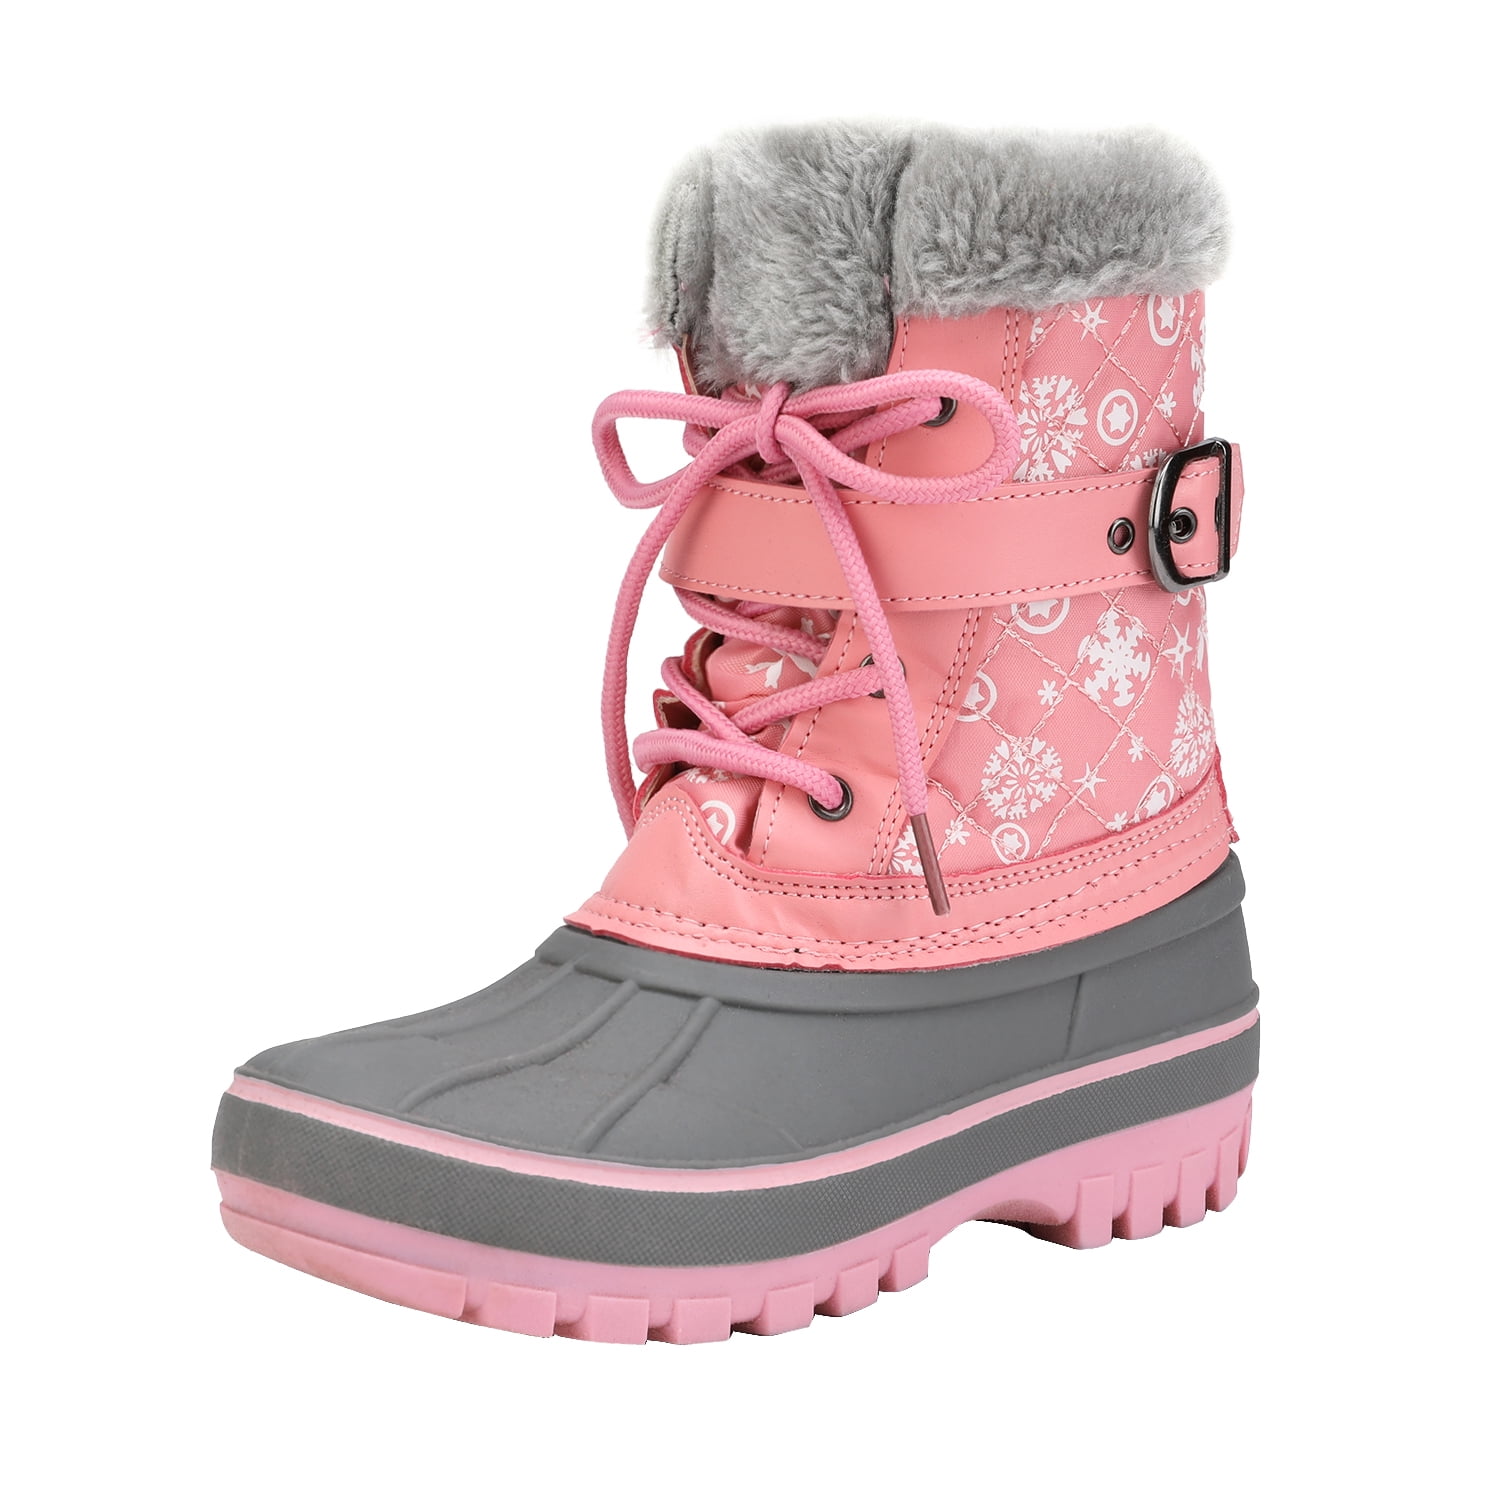 UK 1 1.5 Kids Girls Winter Boots 3M Reflective  HOT FLOW Waterproof Eur 32 33 